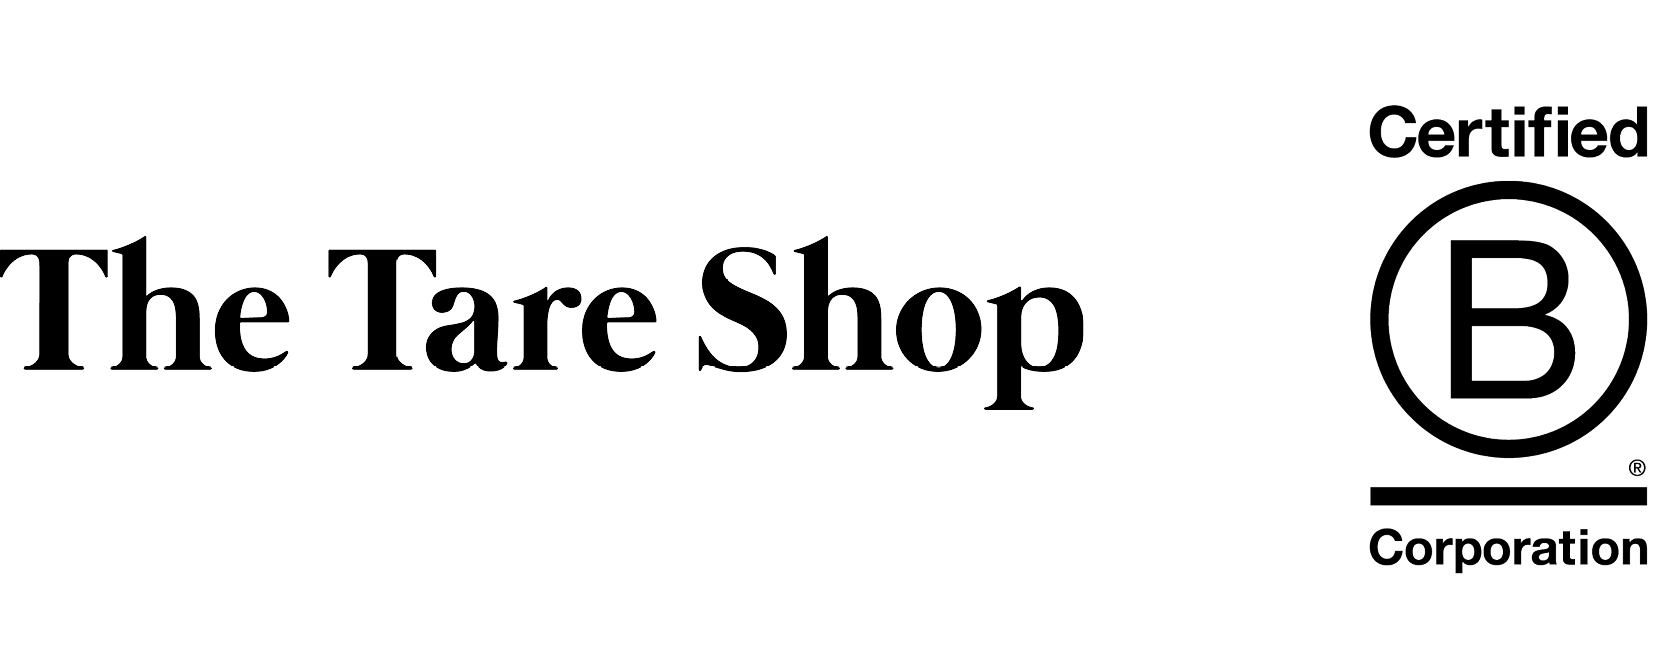 The Tare Shop logo alongside the Certified B Corporation logo.